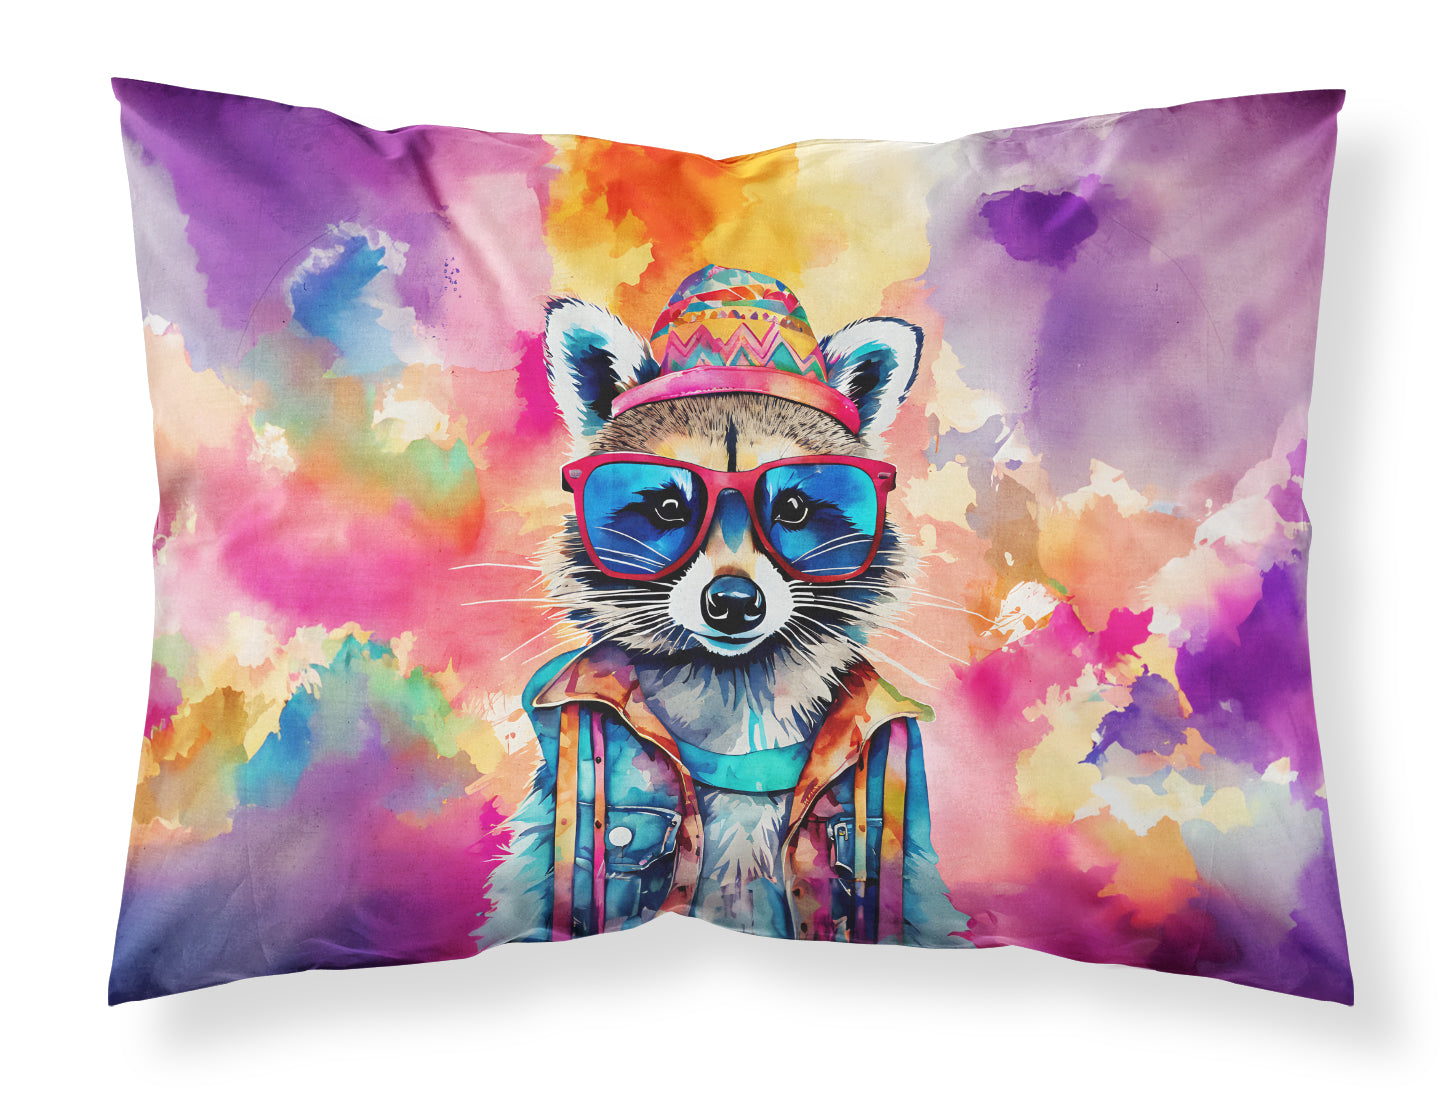 Buy this Hippie Animal Raccoon Standard Pillowcase